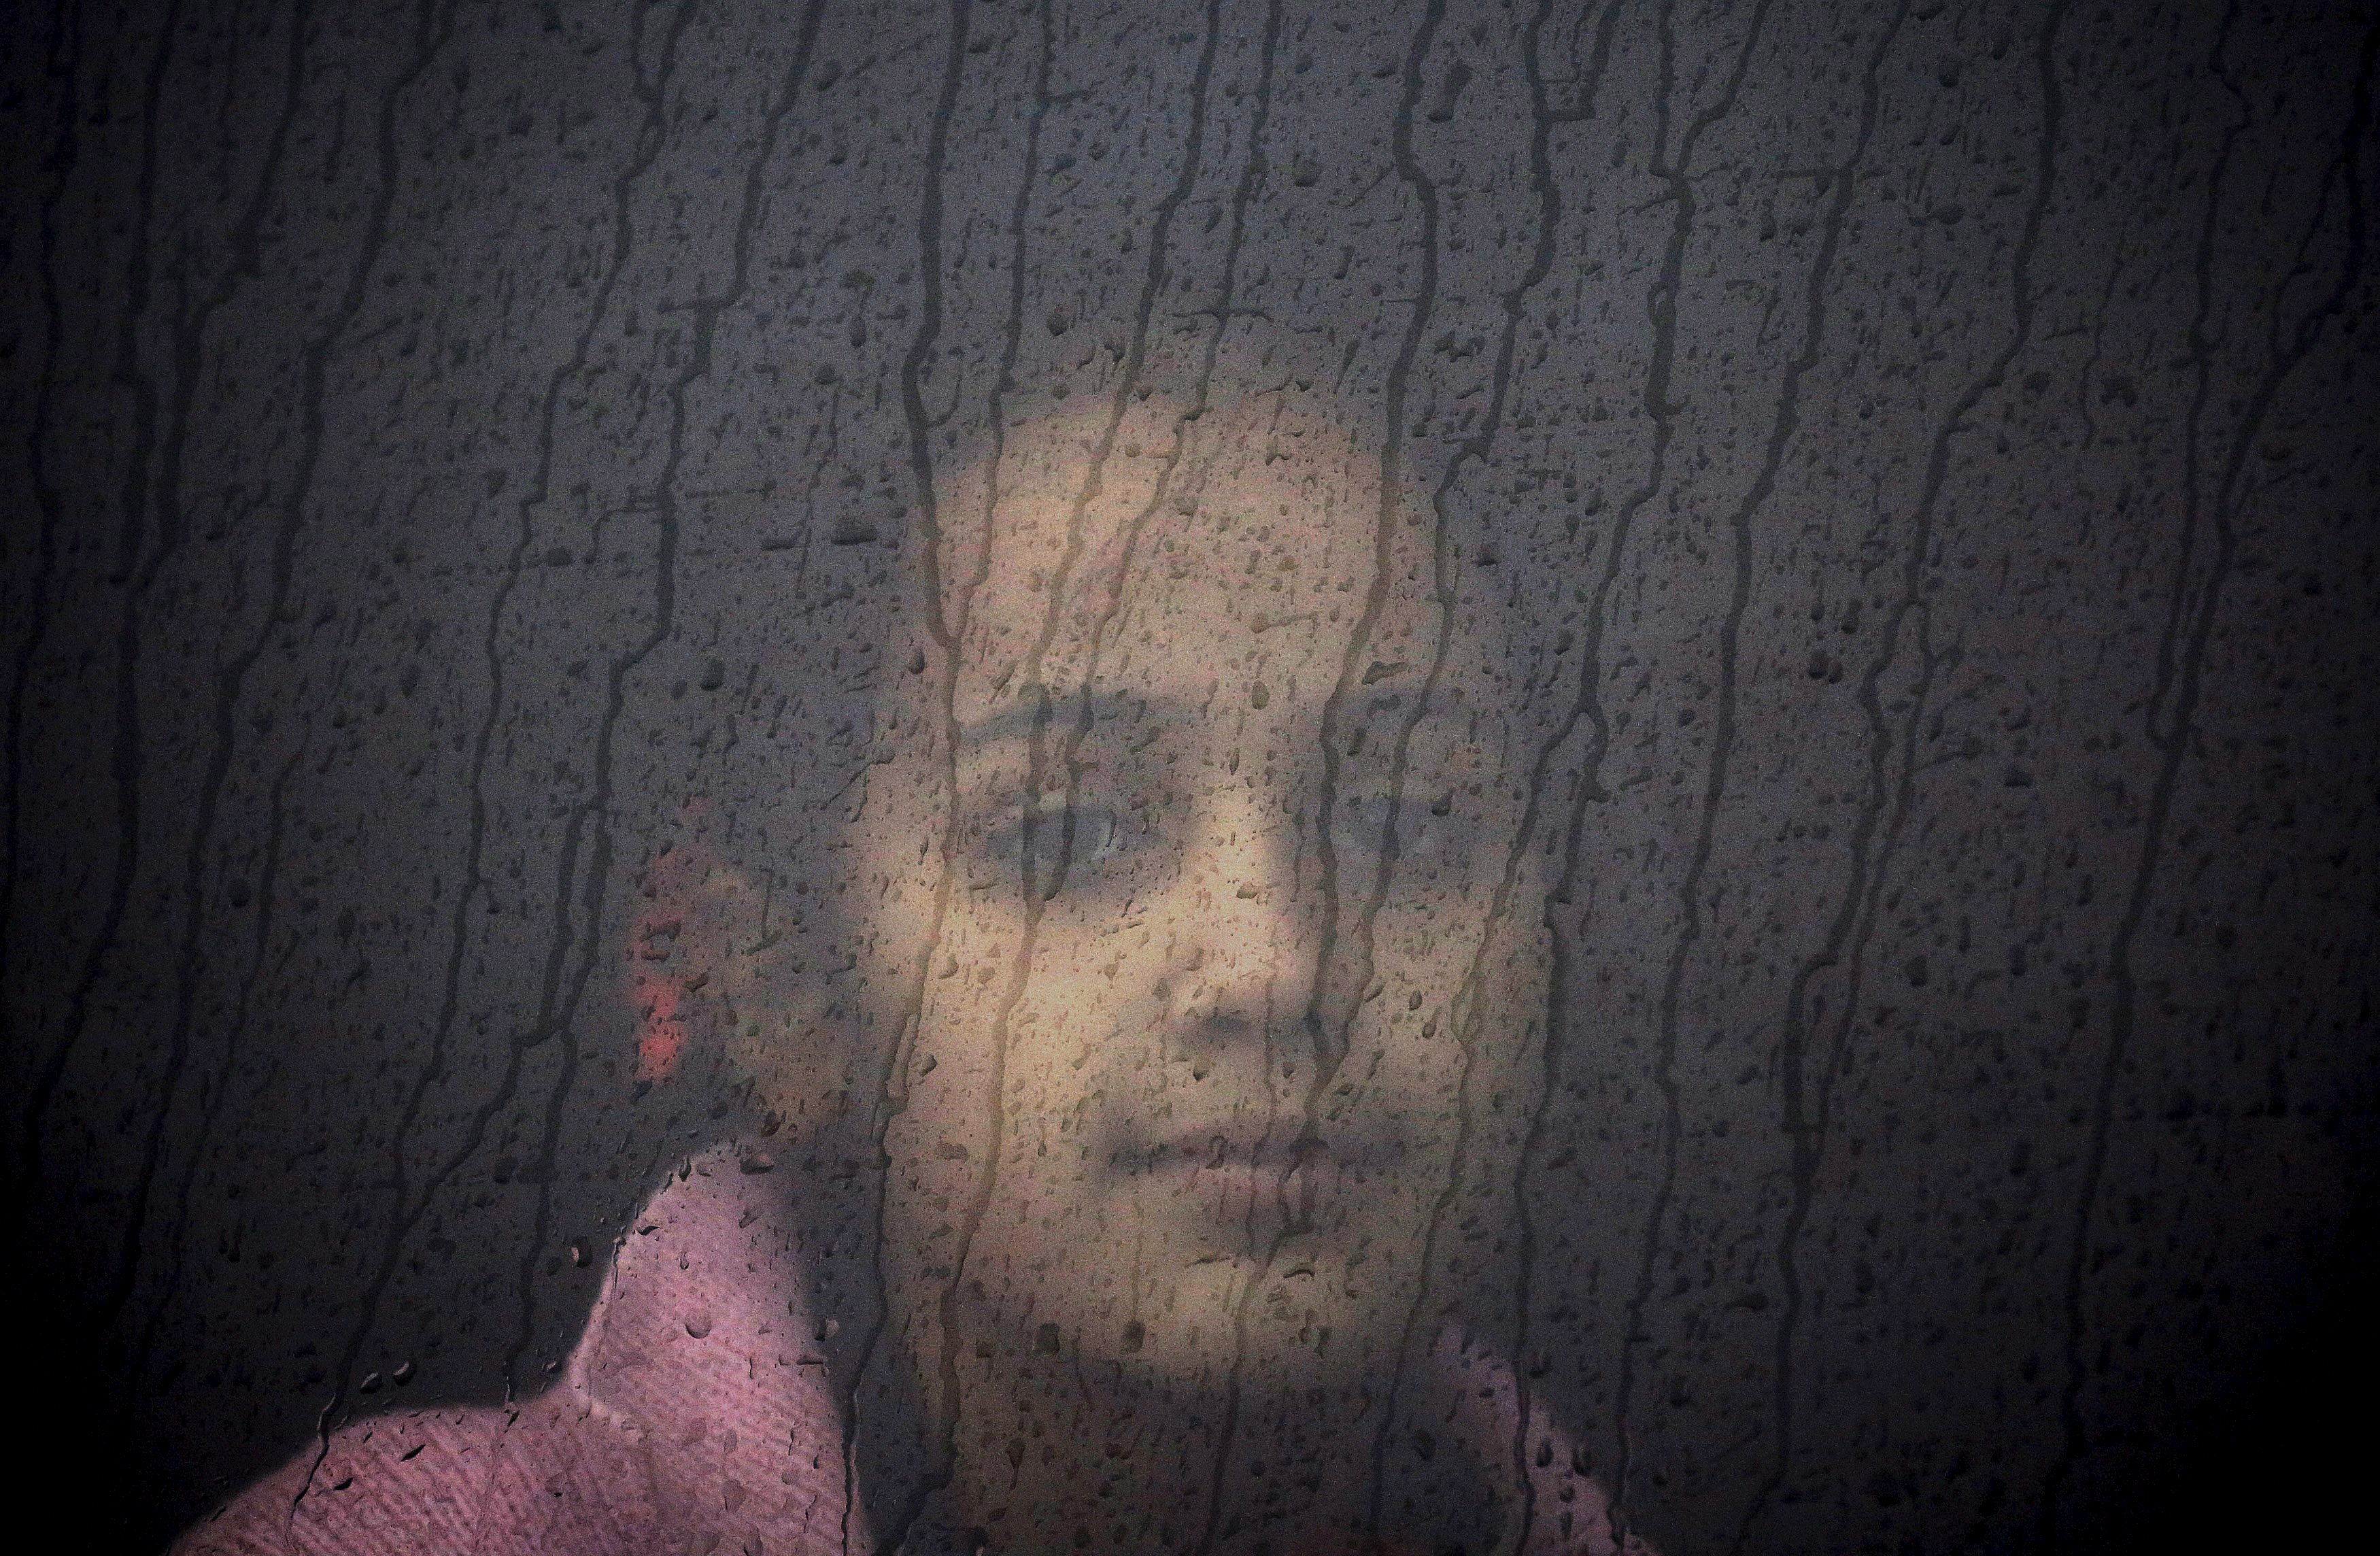 Pengungsi anak Suriah duduk di sebuah bus di kamp registrasi sementara saat hujan badai di pulau Lesbos Yunani, Rabu (21/10). Lebih dari setengah juta pengungsi dan migran telah tiba di Yunani melalui laut tahun ini dan jumlah kedatangan meningkat lebih dari 8000 pada hari Senin, berpacu dengan musim dingin yang akan segera datang, menurut keterangan PBB pada hari Selasa. ANTARA FOTO/REUTERS/Yannis Behrakis.